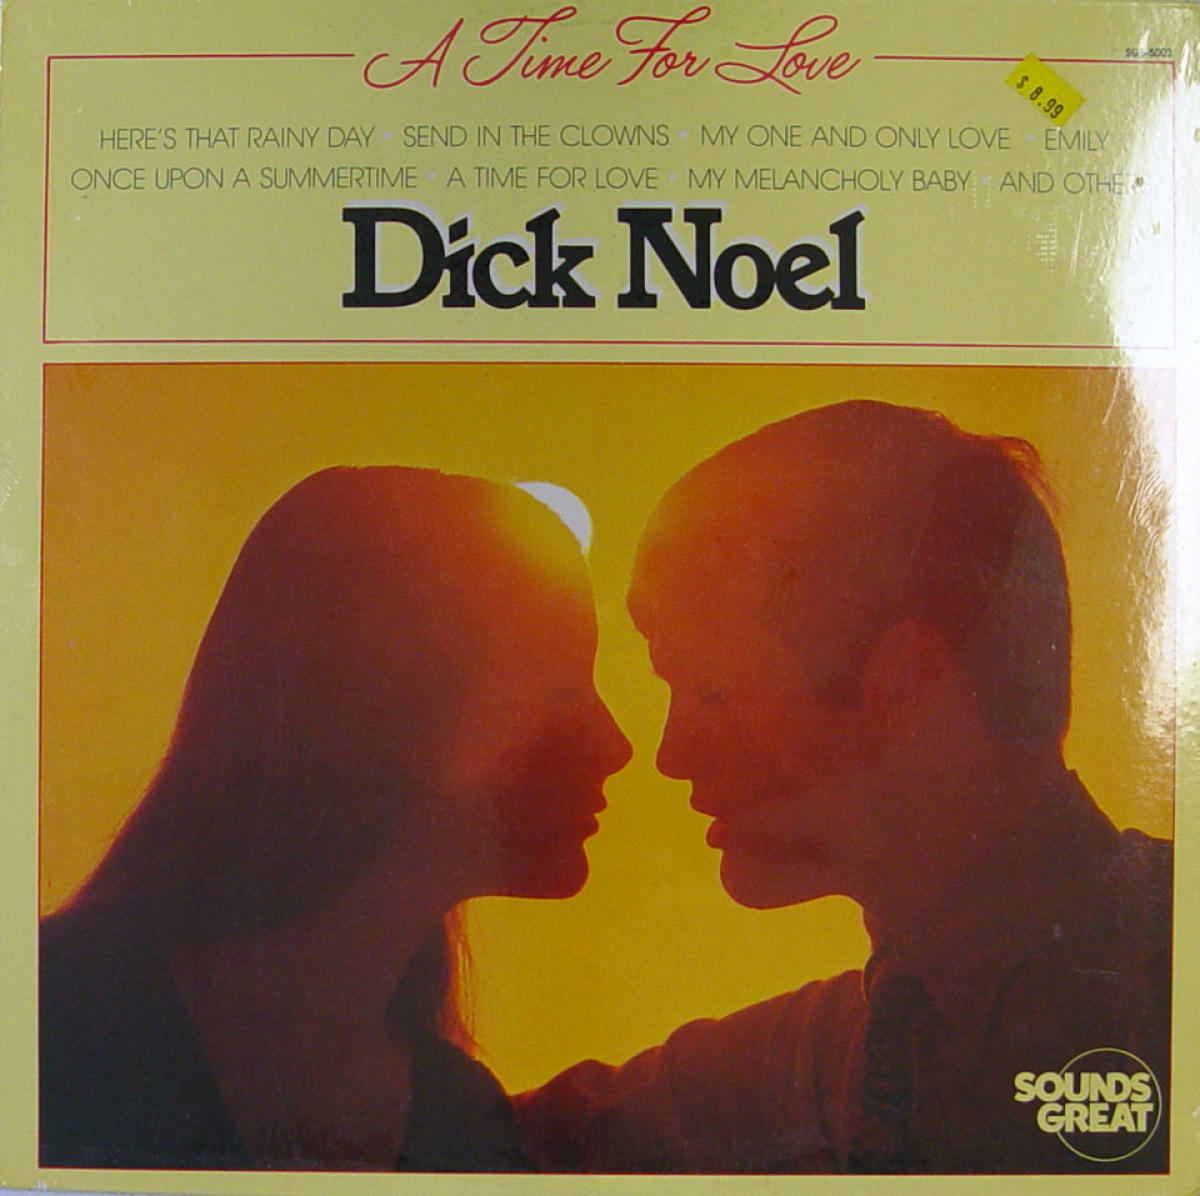 Dick noel time for love